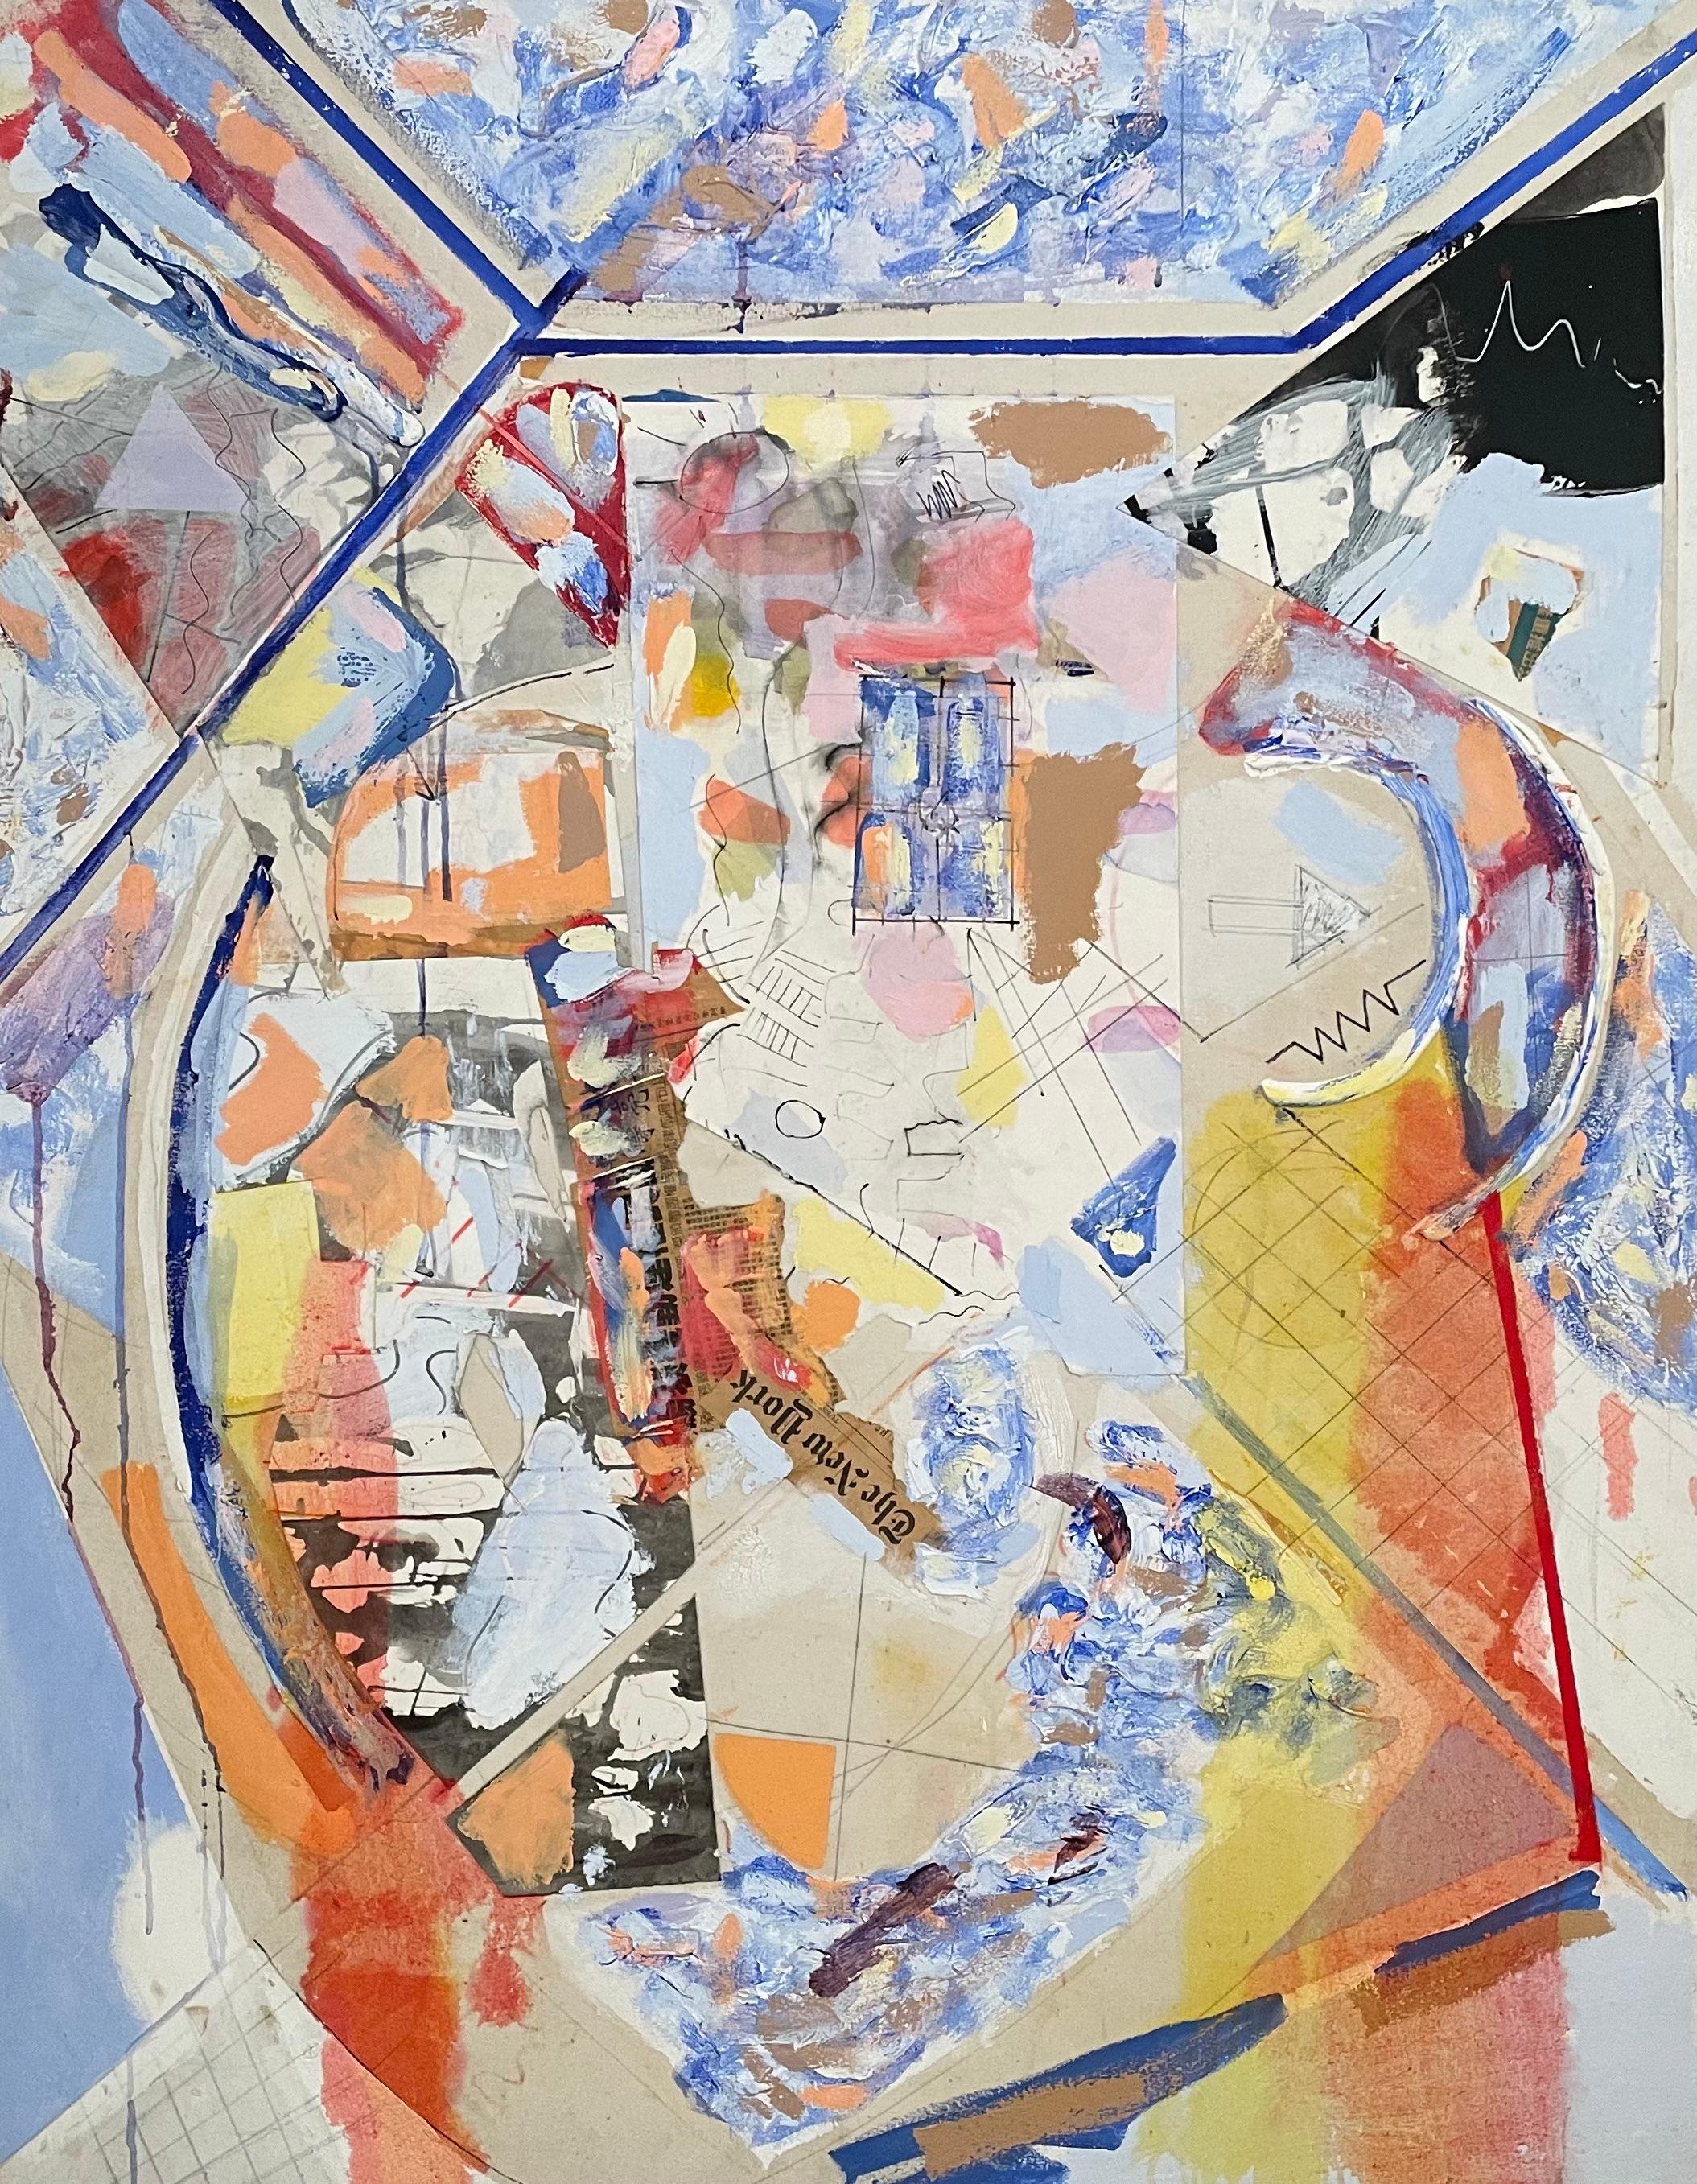 Abstract Painting Steven H. Rehfeld - "The New York" Grande oeuvre abstraite contemporaine en Mixed Media de Steven Rehfeld